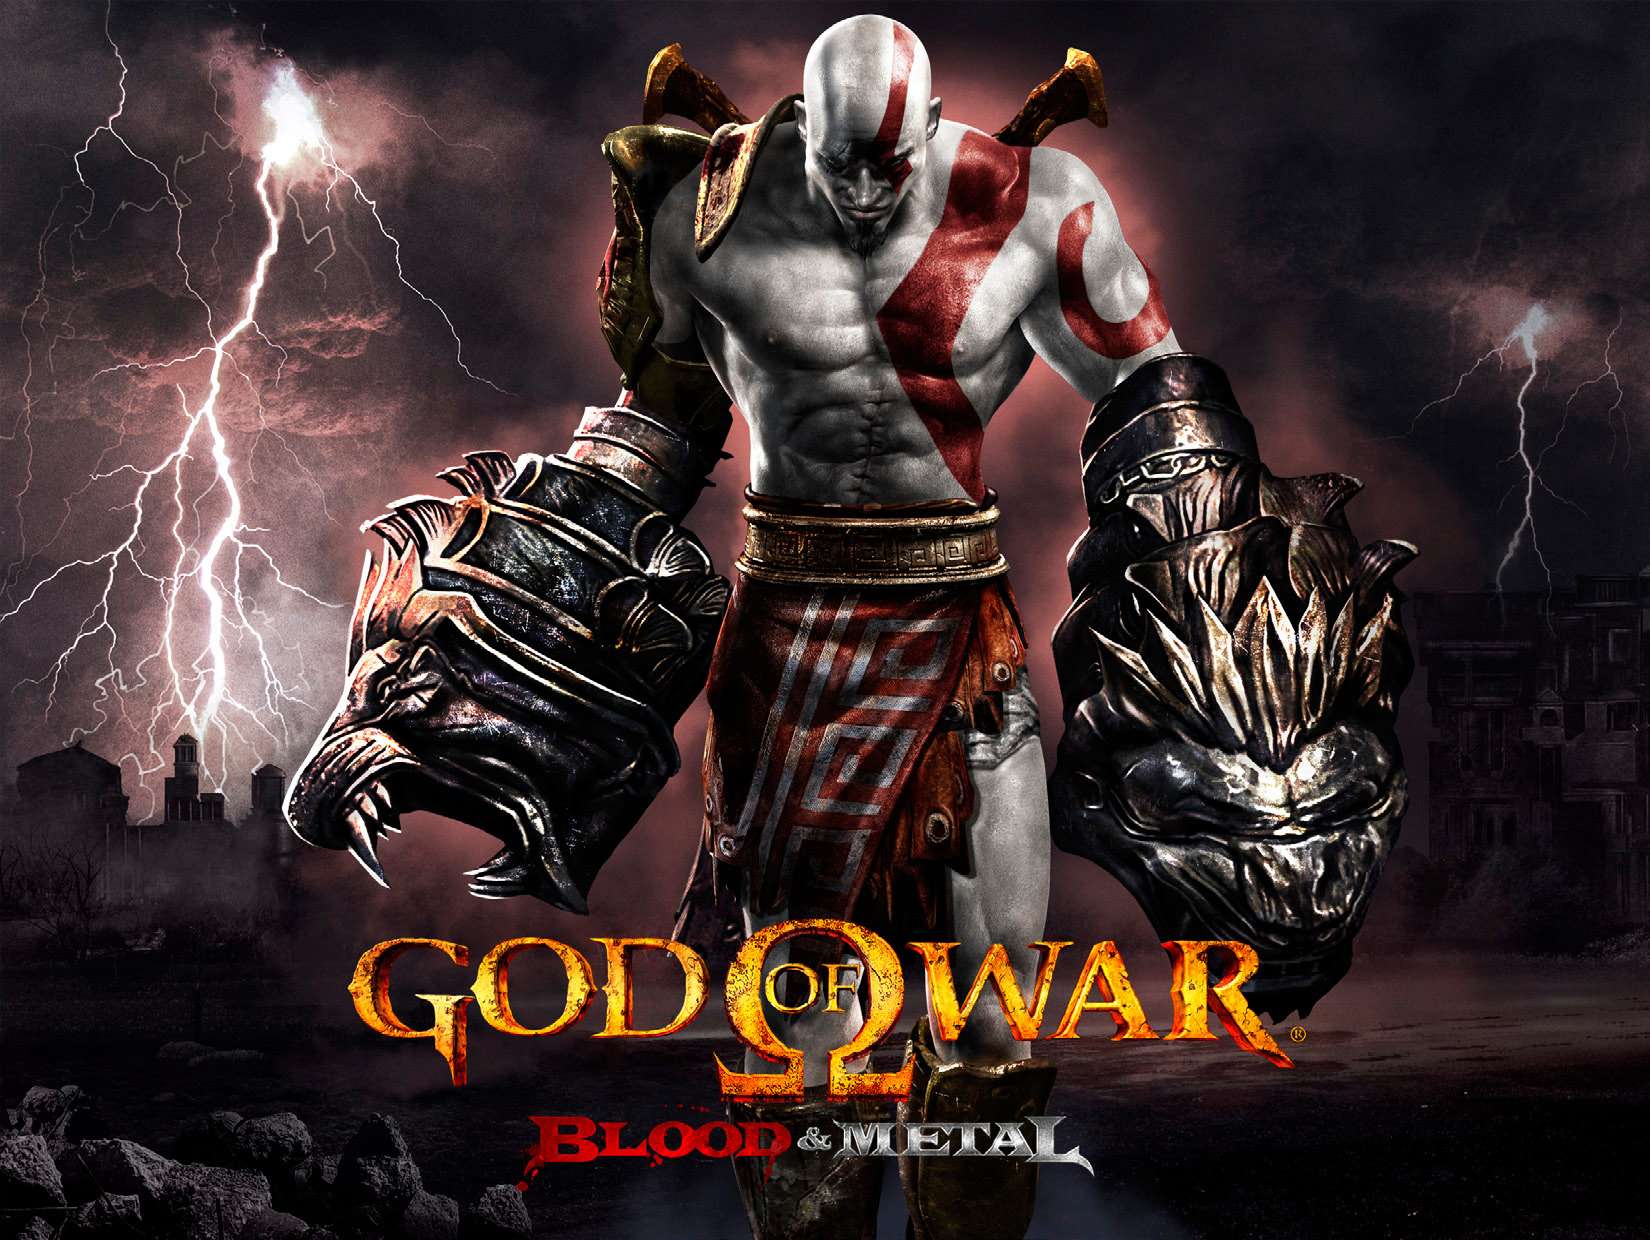 God of war: blood and metal